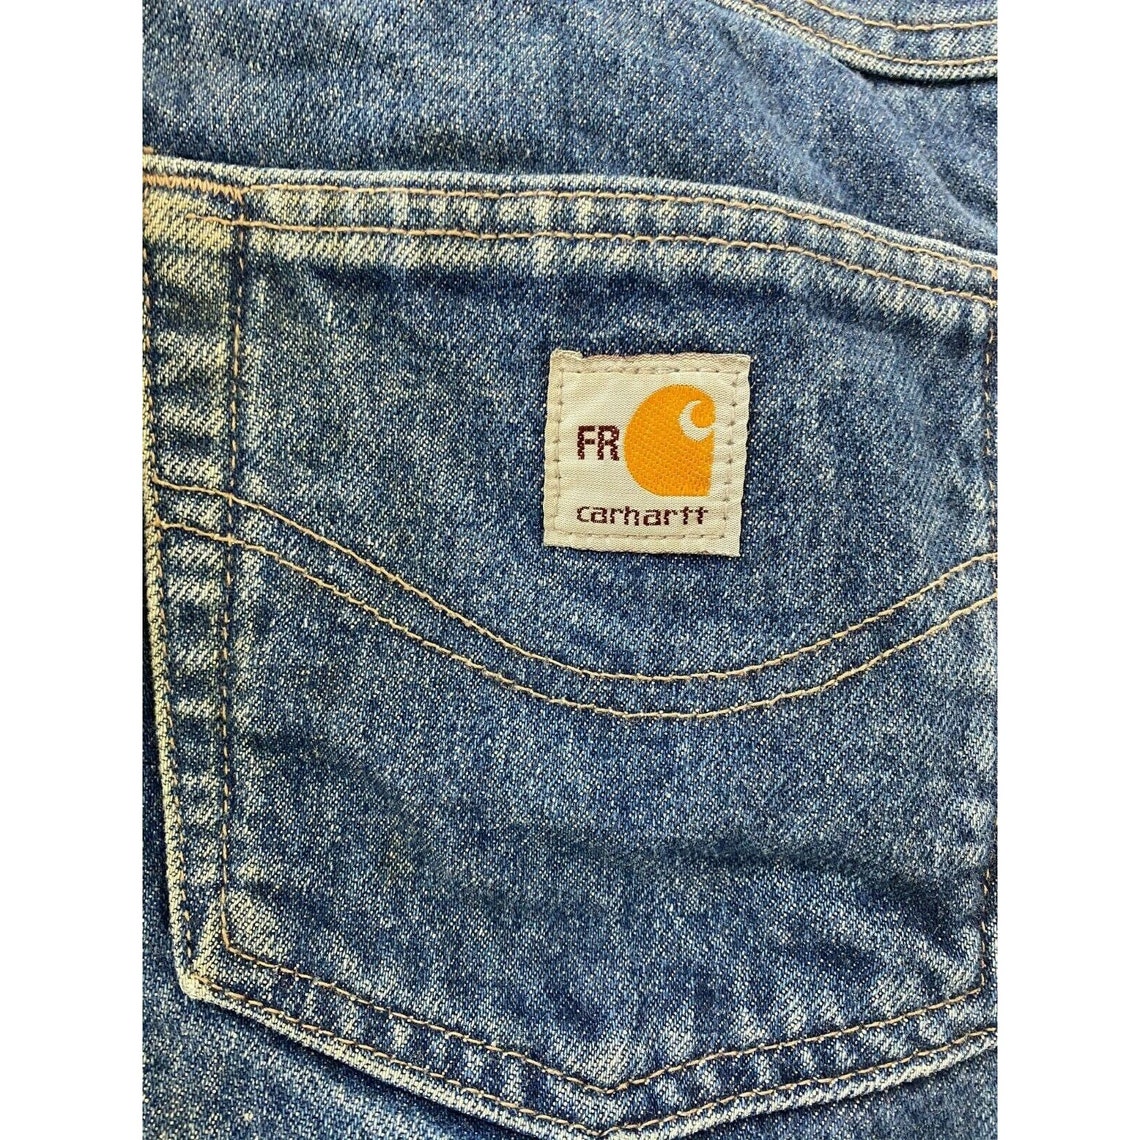 CARHARTT FR 2112 CAT2 Jeans Dark Denim Wash Street Style | Etsy